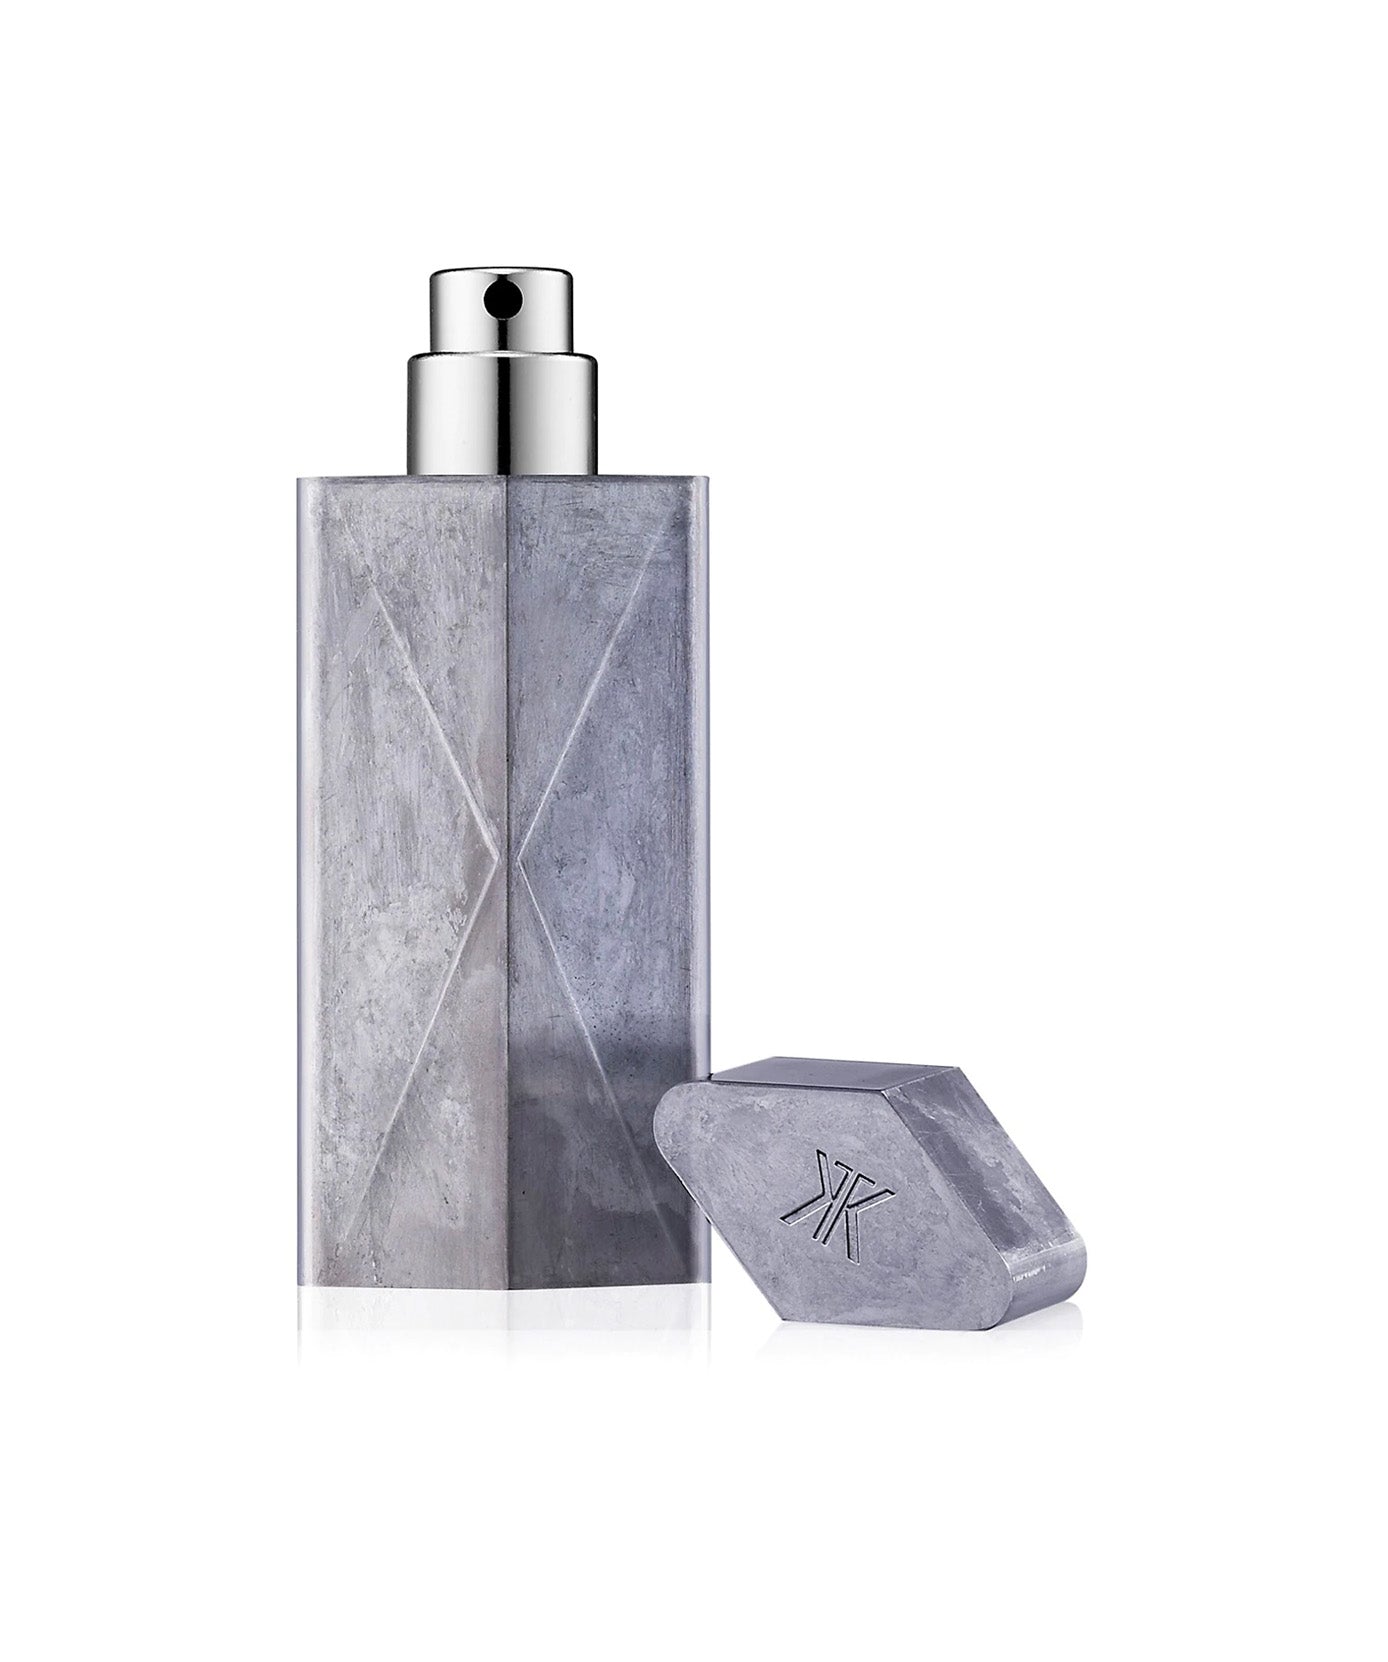 Maison Francis Kurkdjian Globe Trotter Perfume Case in Zinc at Violet x Grace Miami